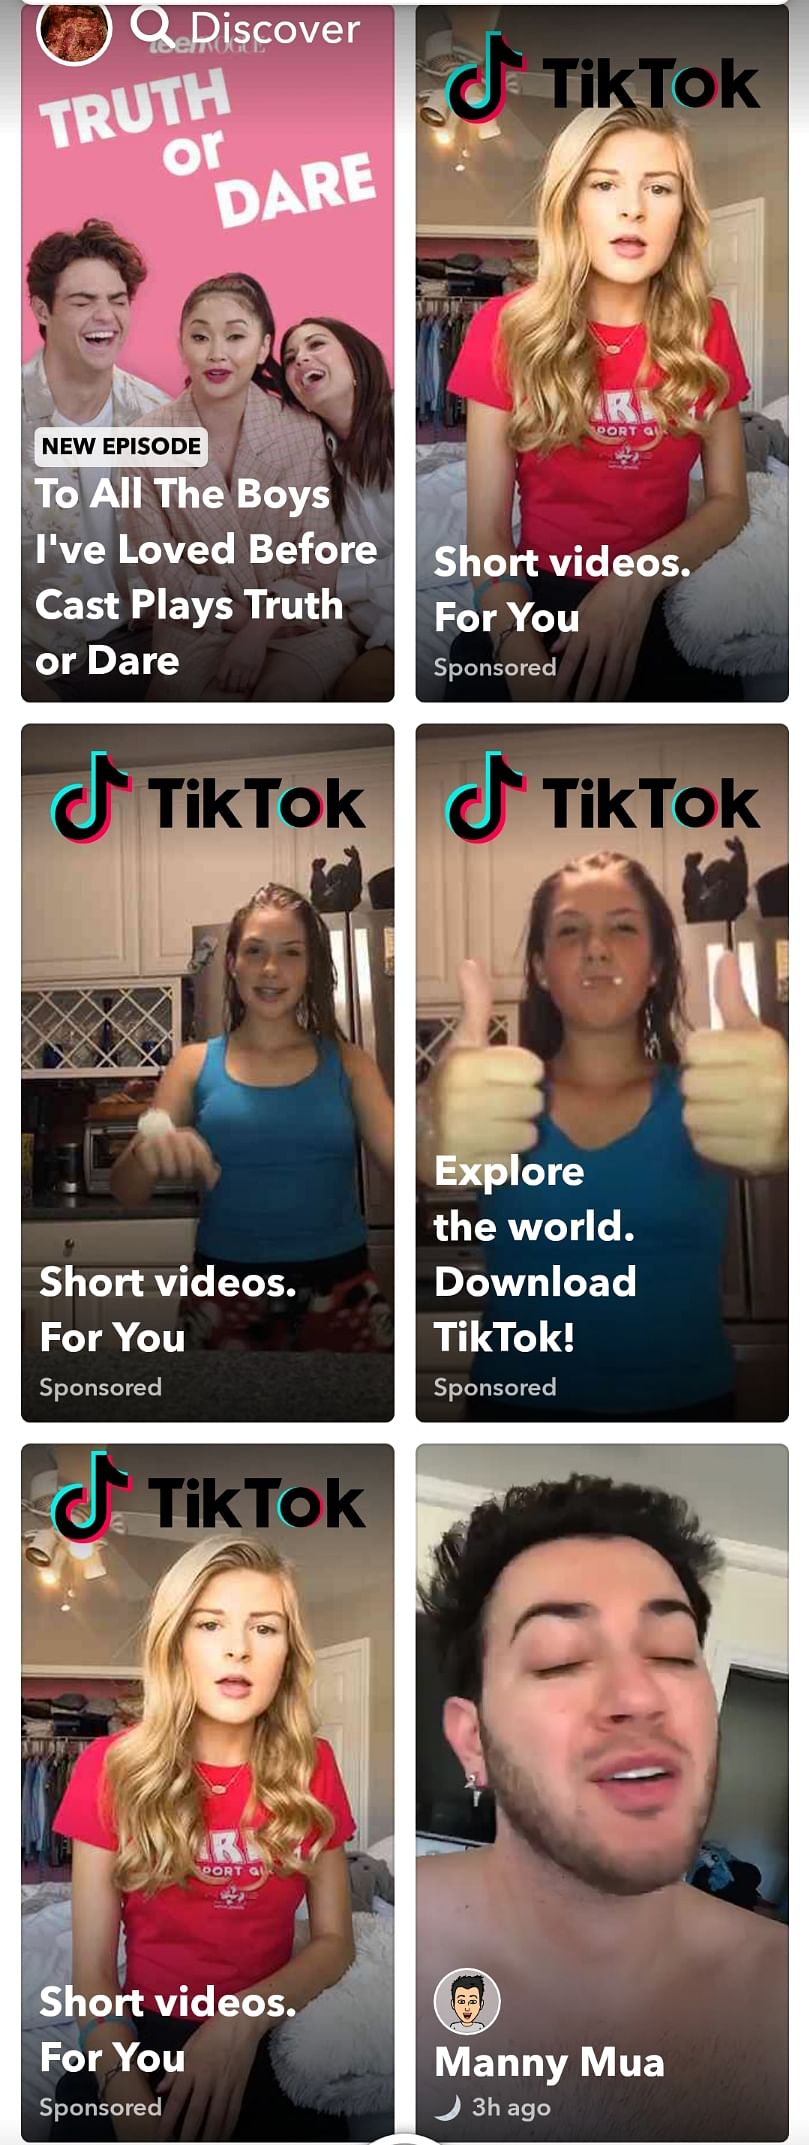 Ads for TikTok on Snapchat (2019)